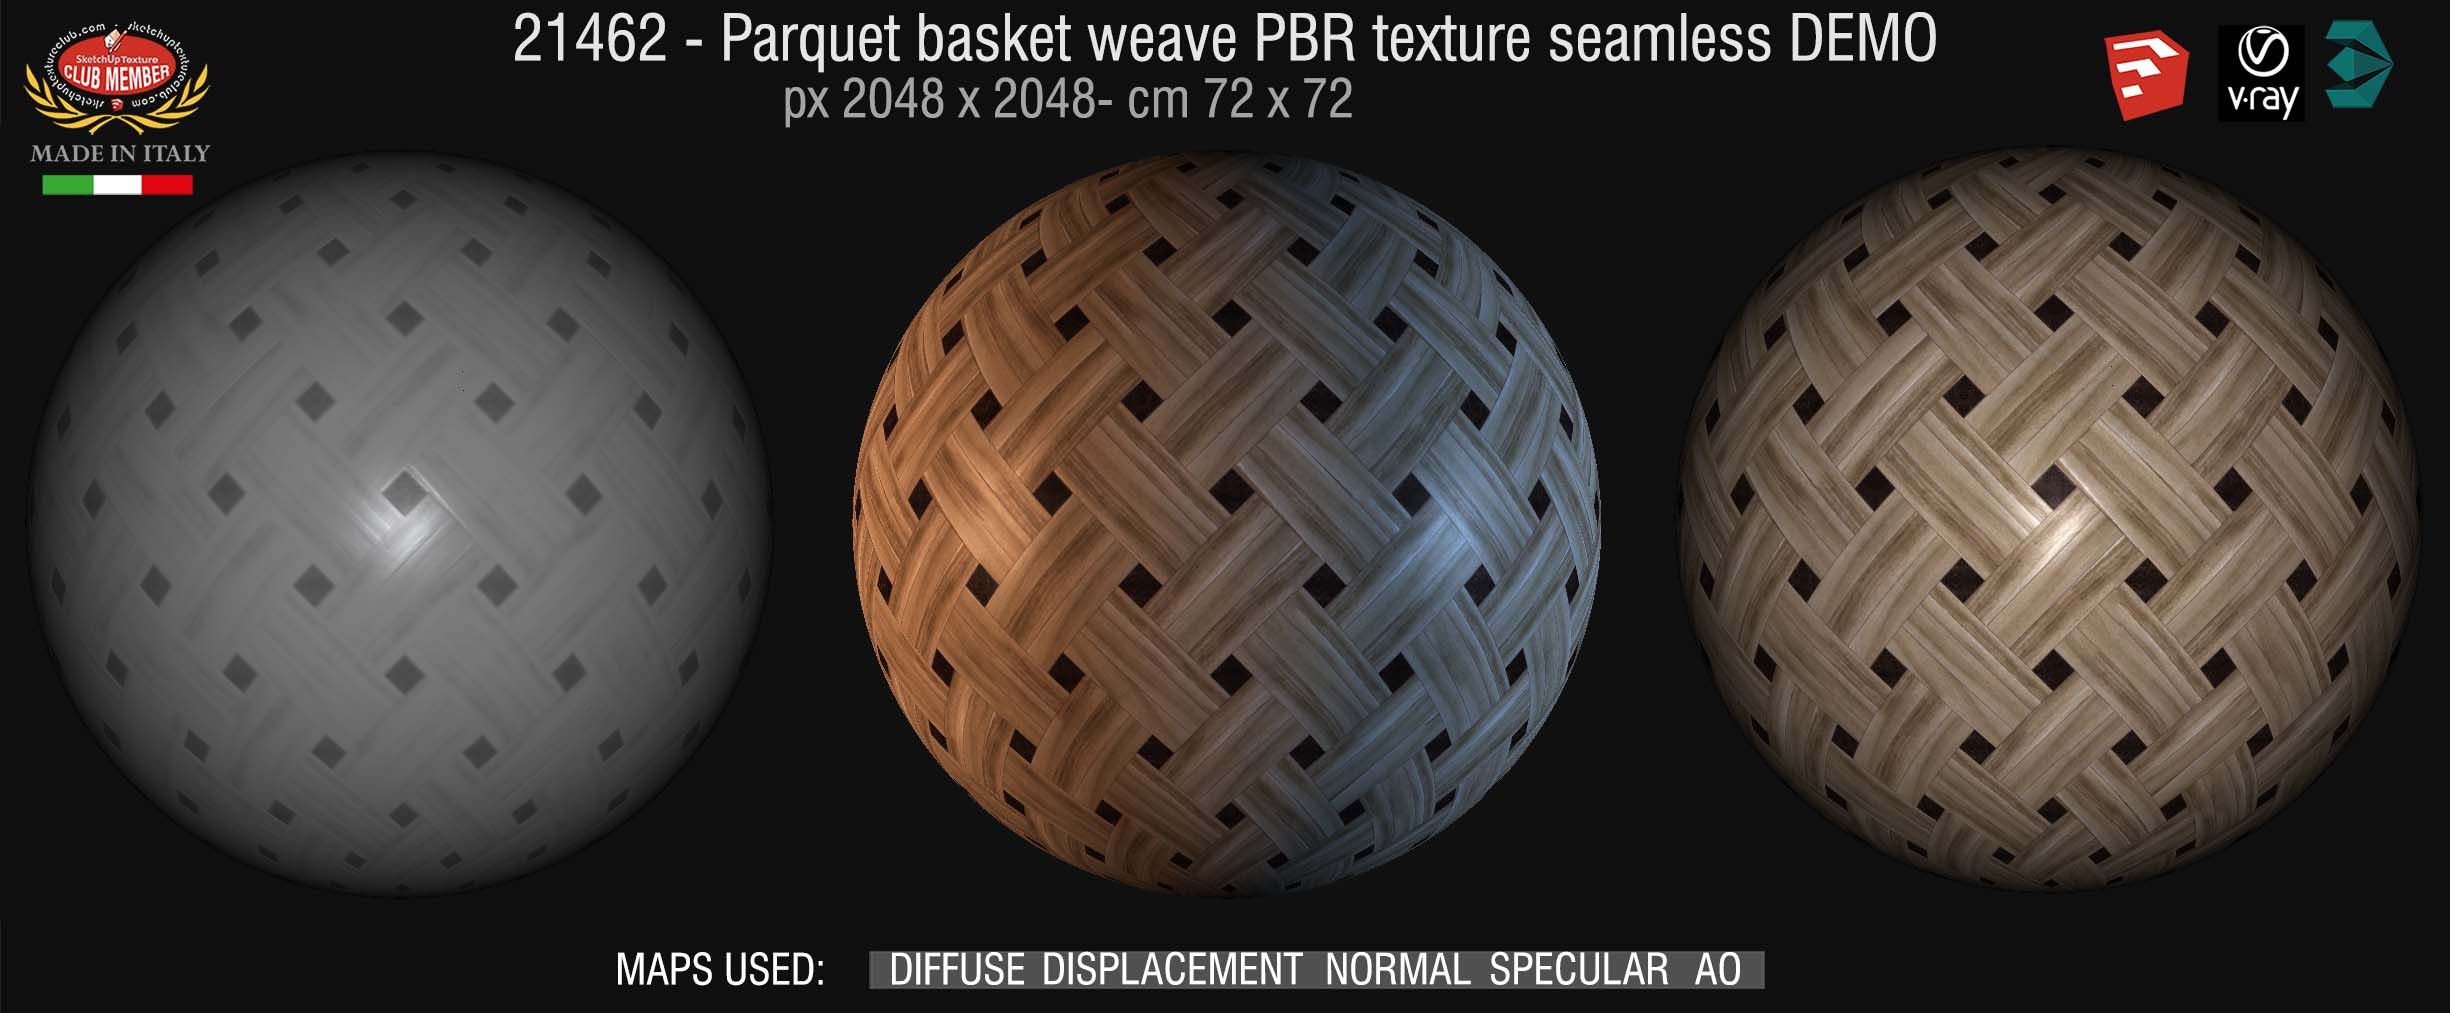 21642 Parquet basket weave PBR texture seamless